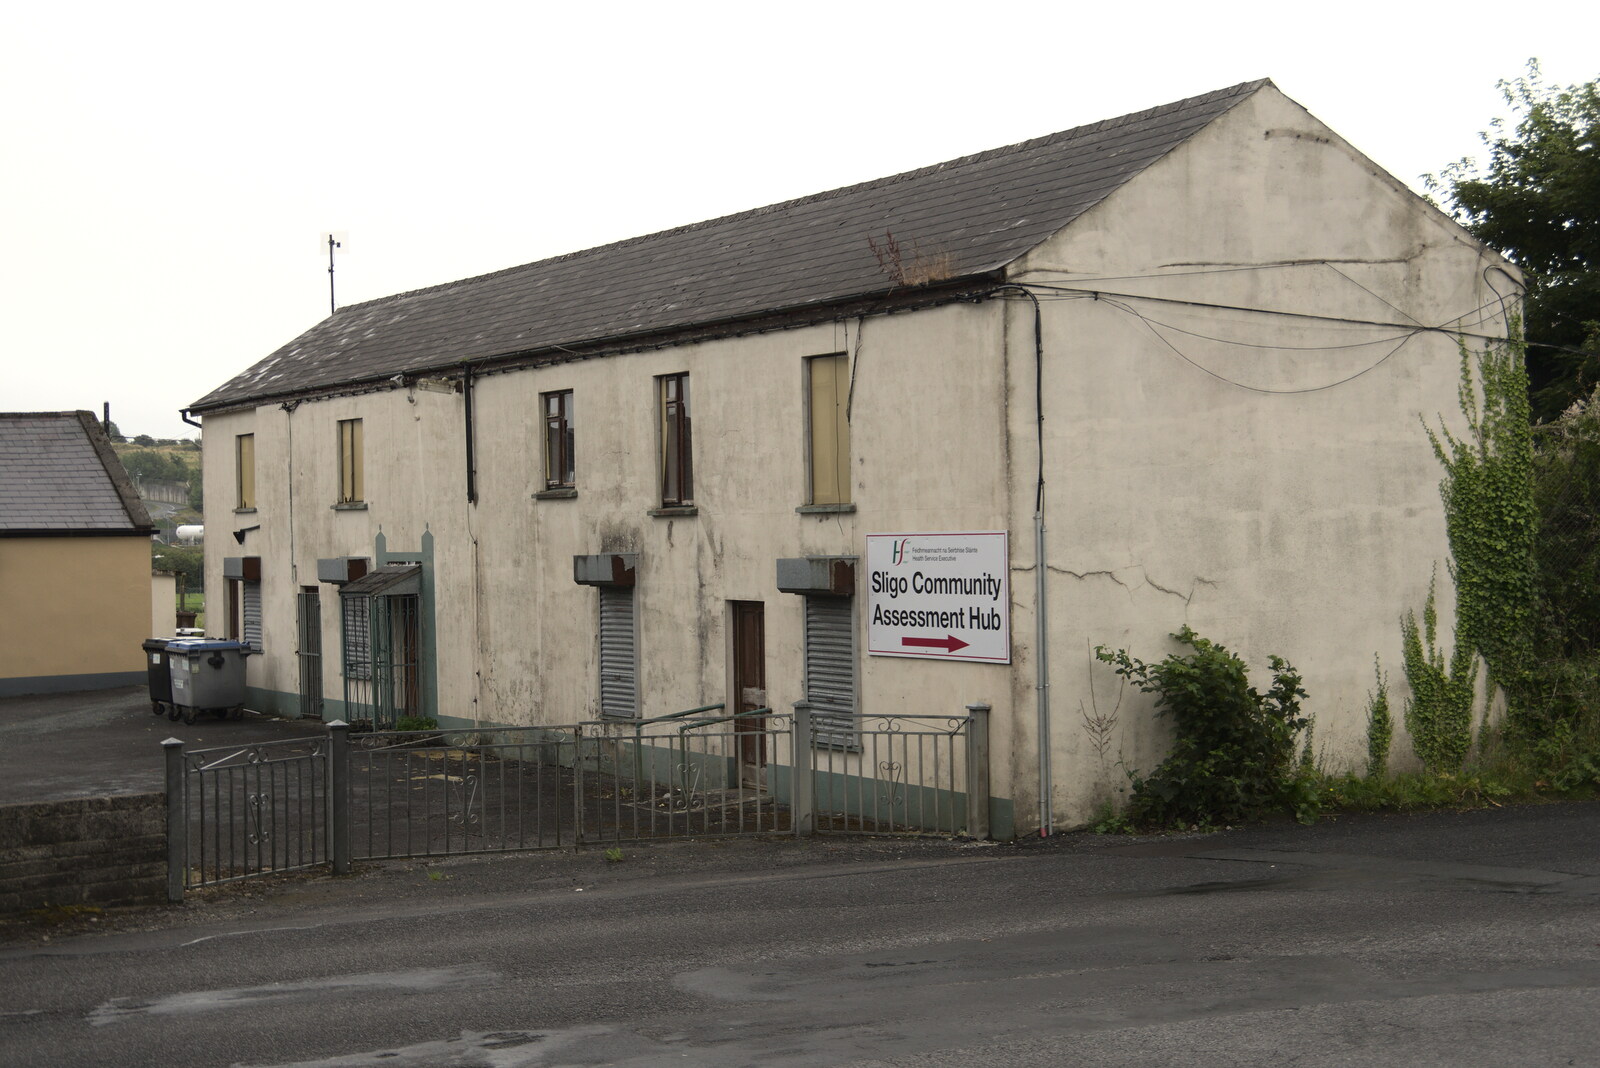 Pints of Guinness and Streedagh Beach, Grange and Sligo, Ireland - 9th August 2021: A derelict building near Benbulben Court